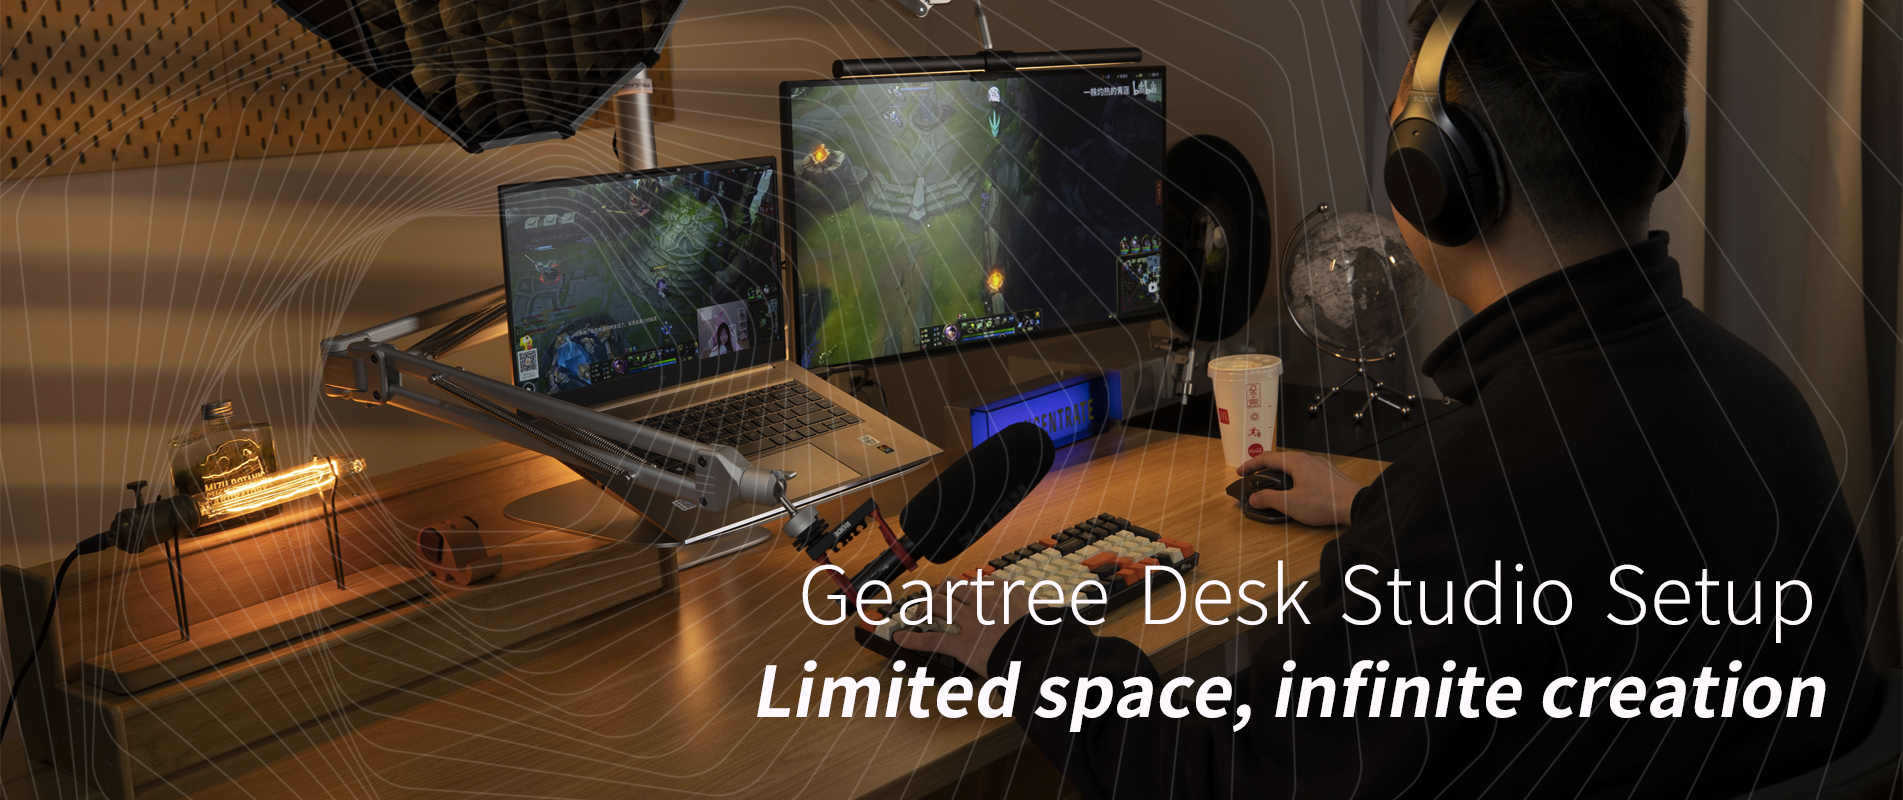 GEARTREE Desk Studio Setup